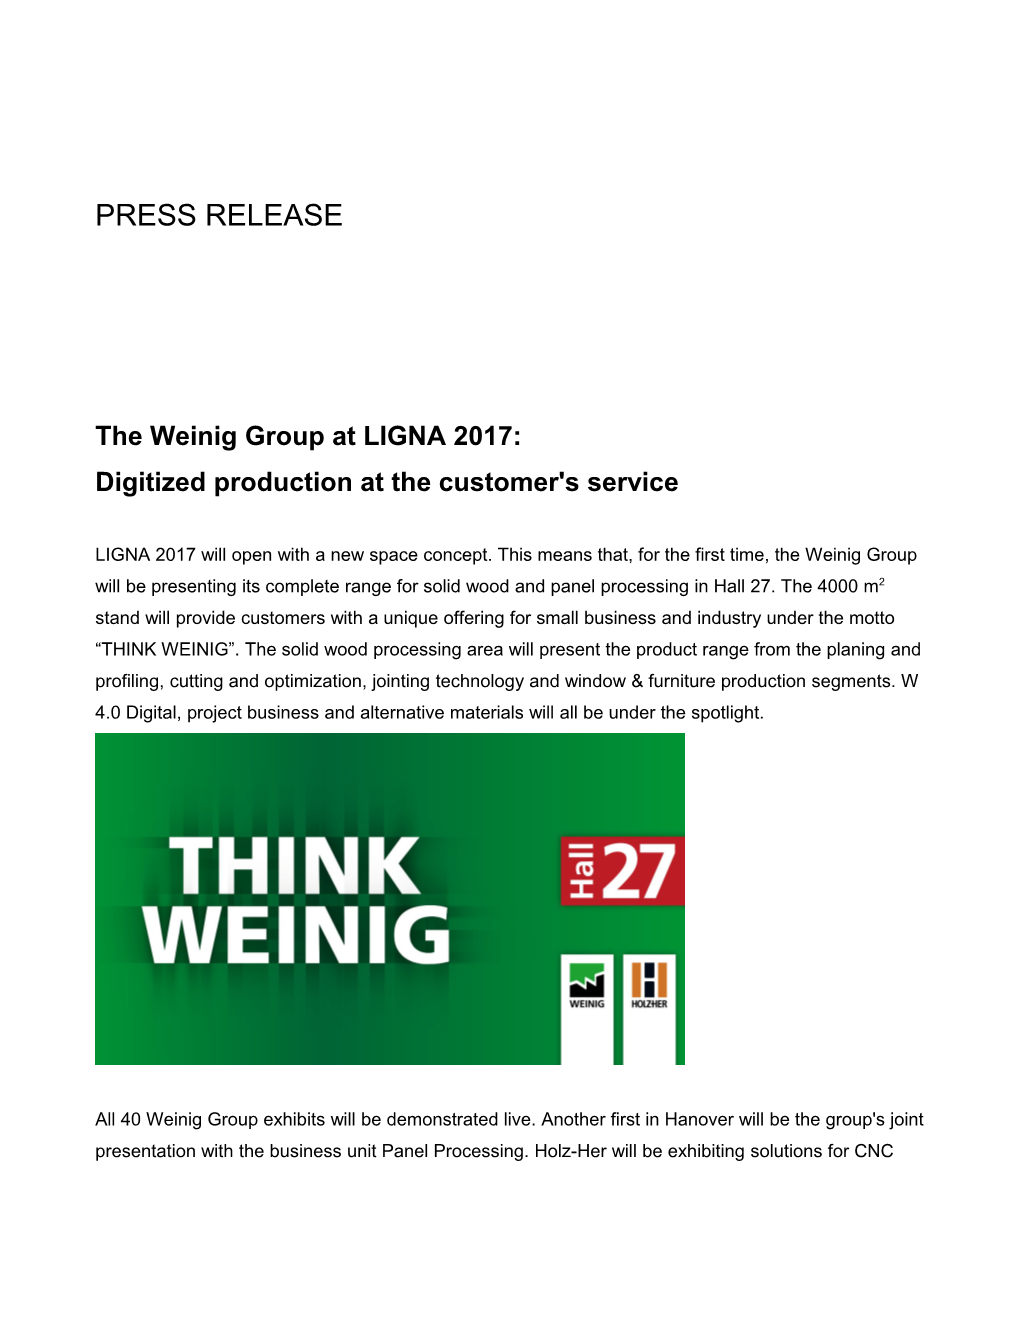 The Weinig Group at LIGNA 2017